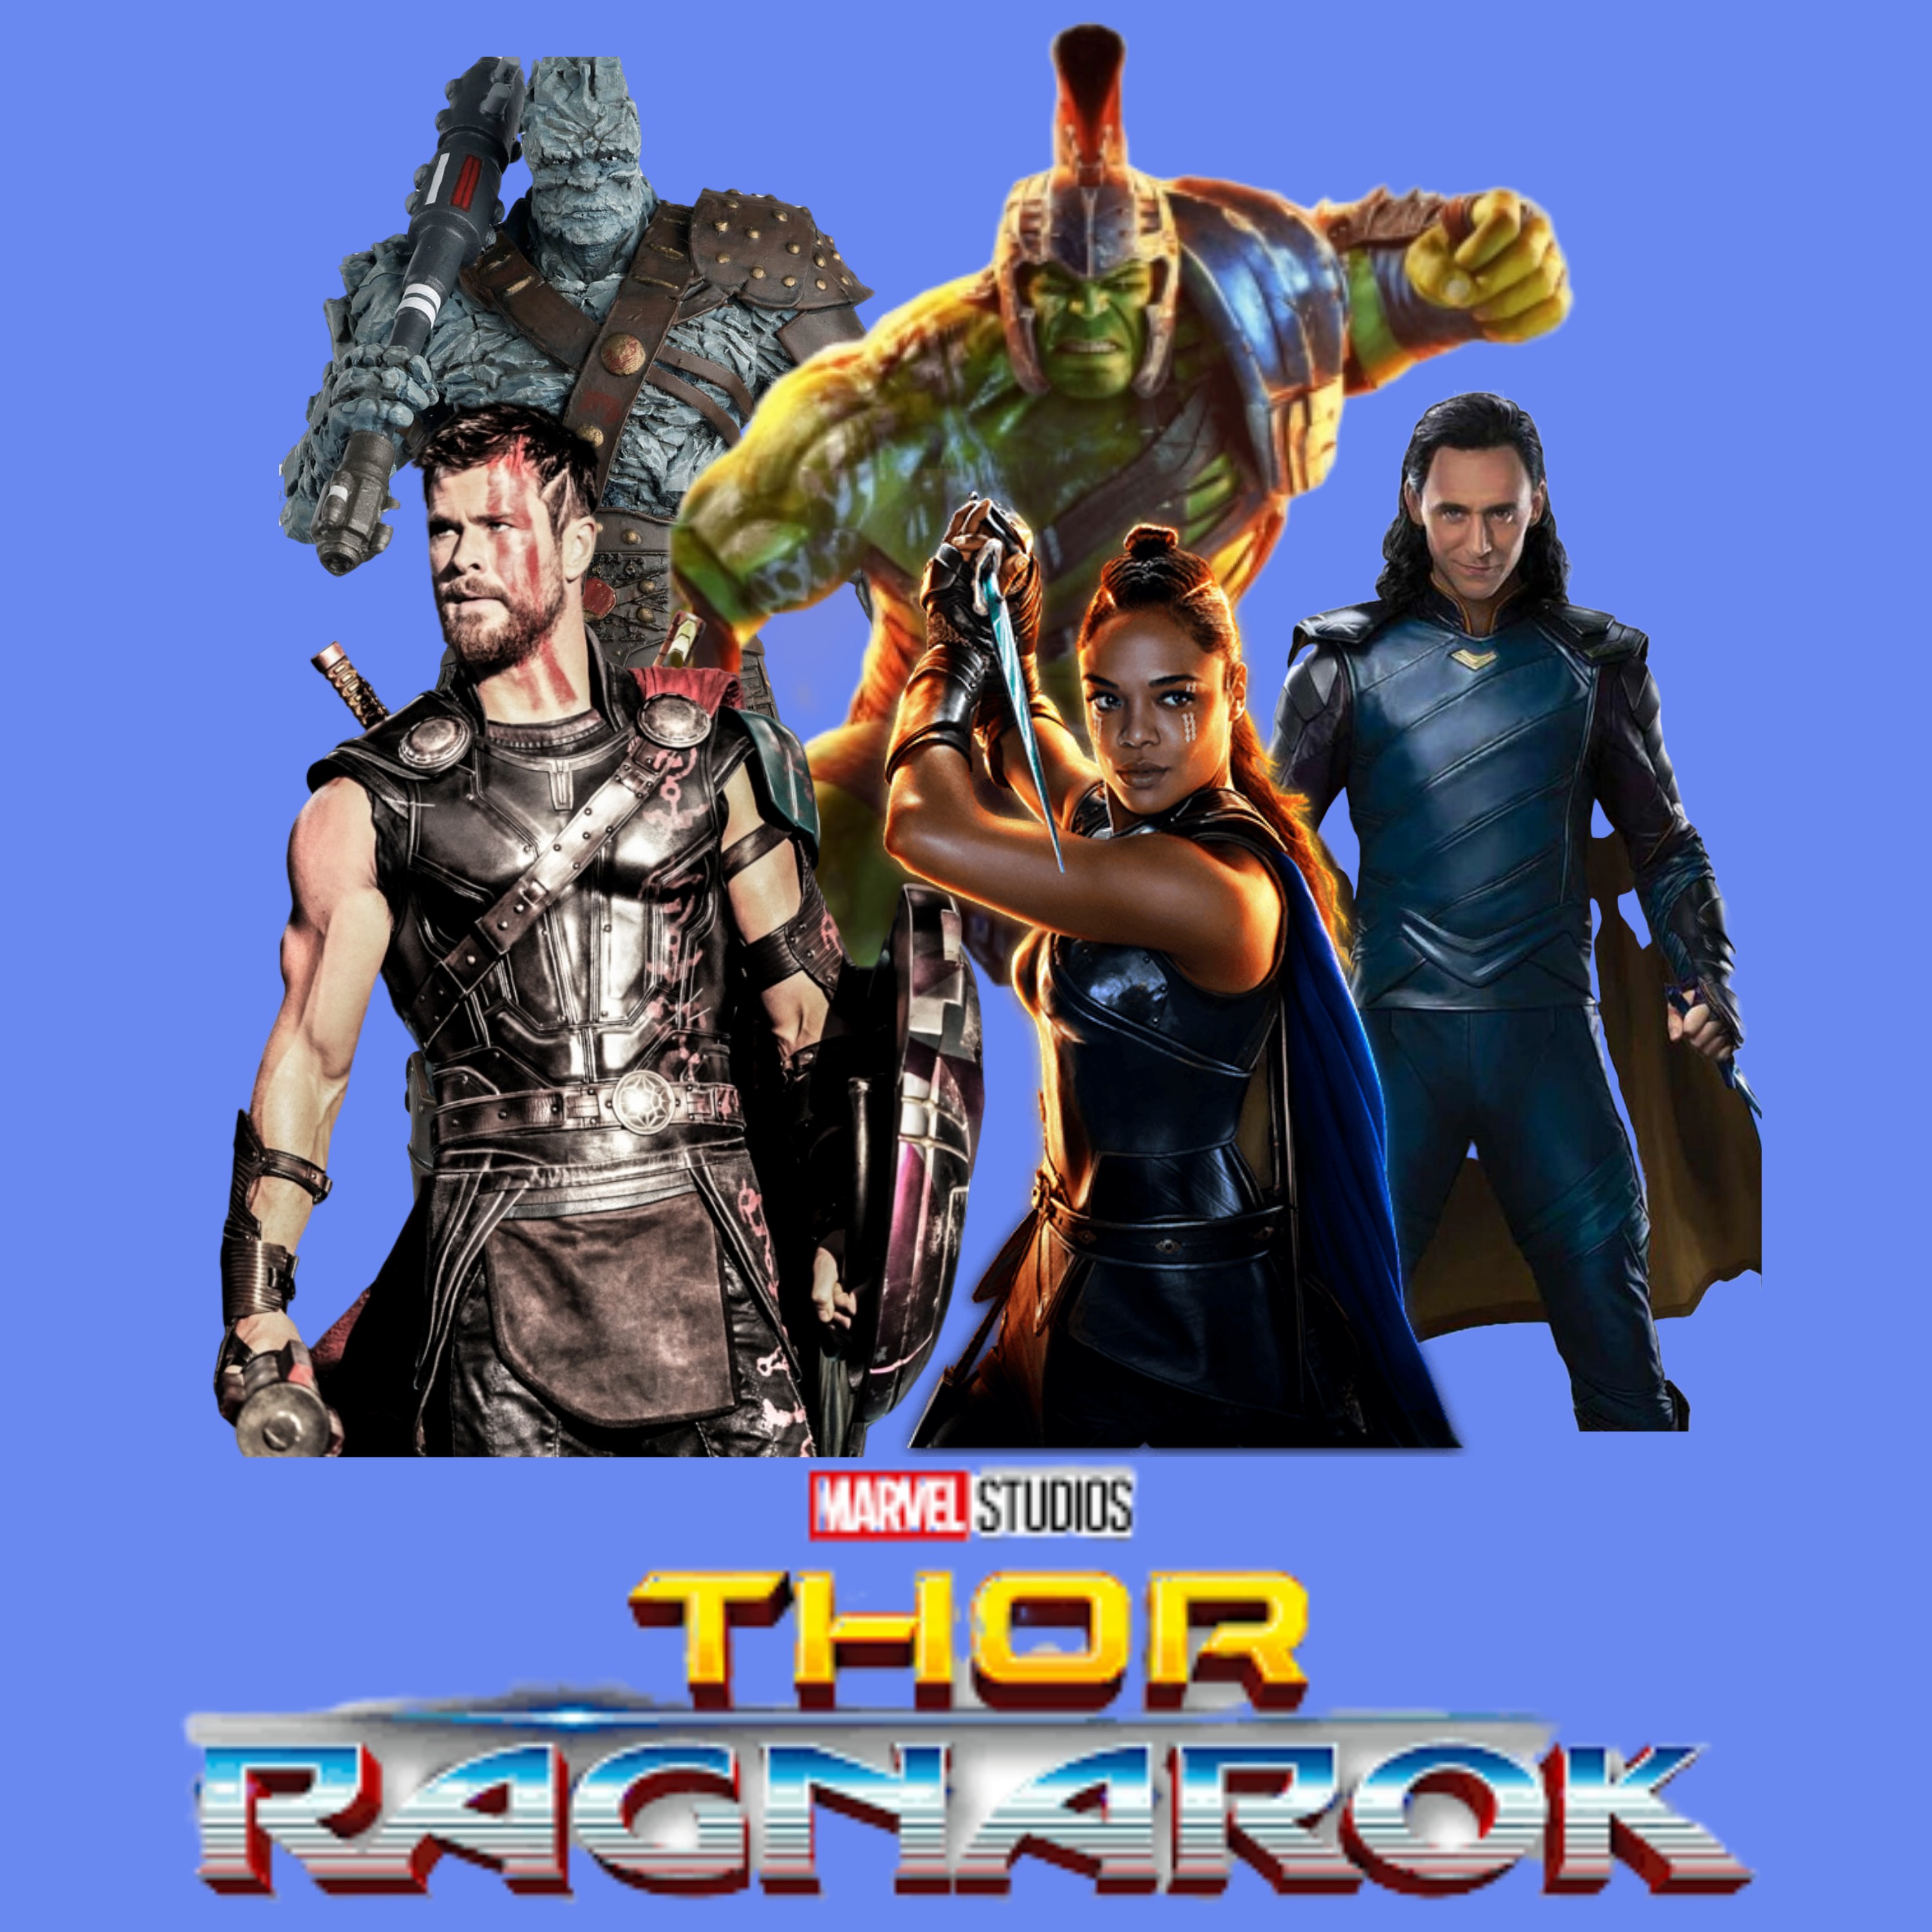 Thor Ragnarok Image